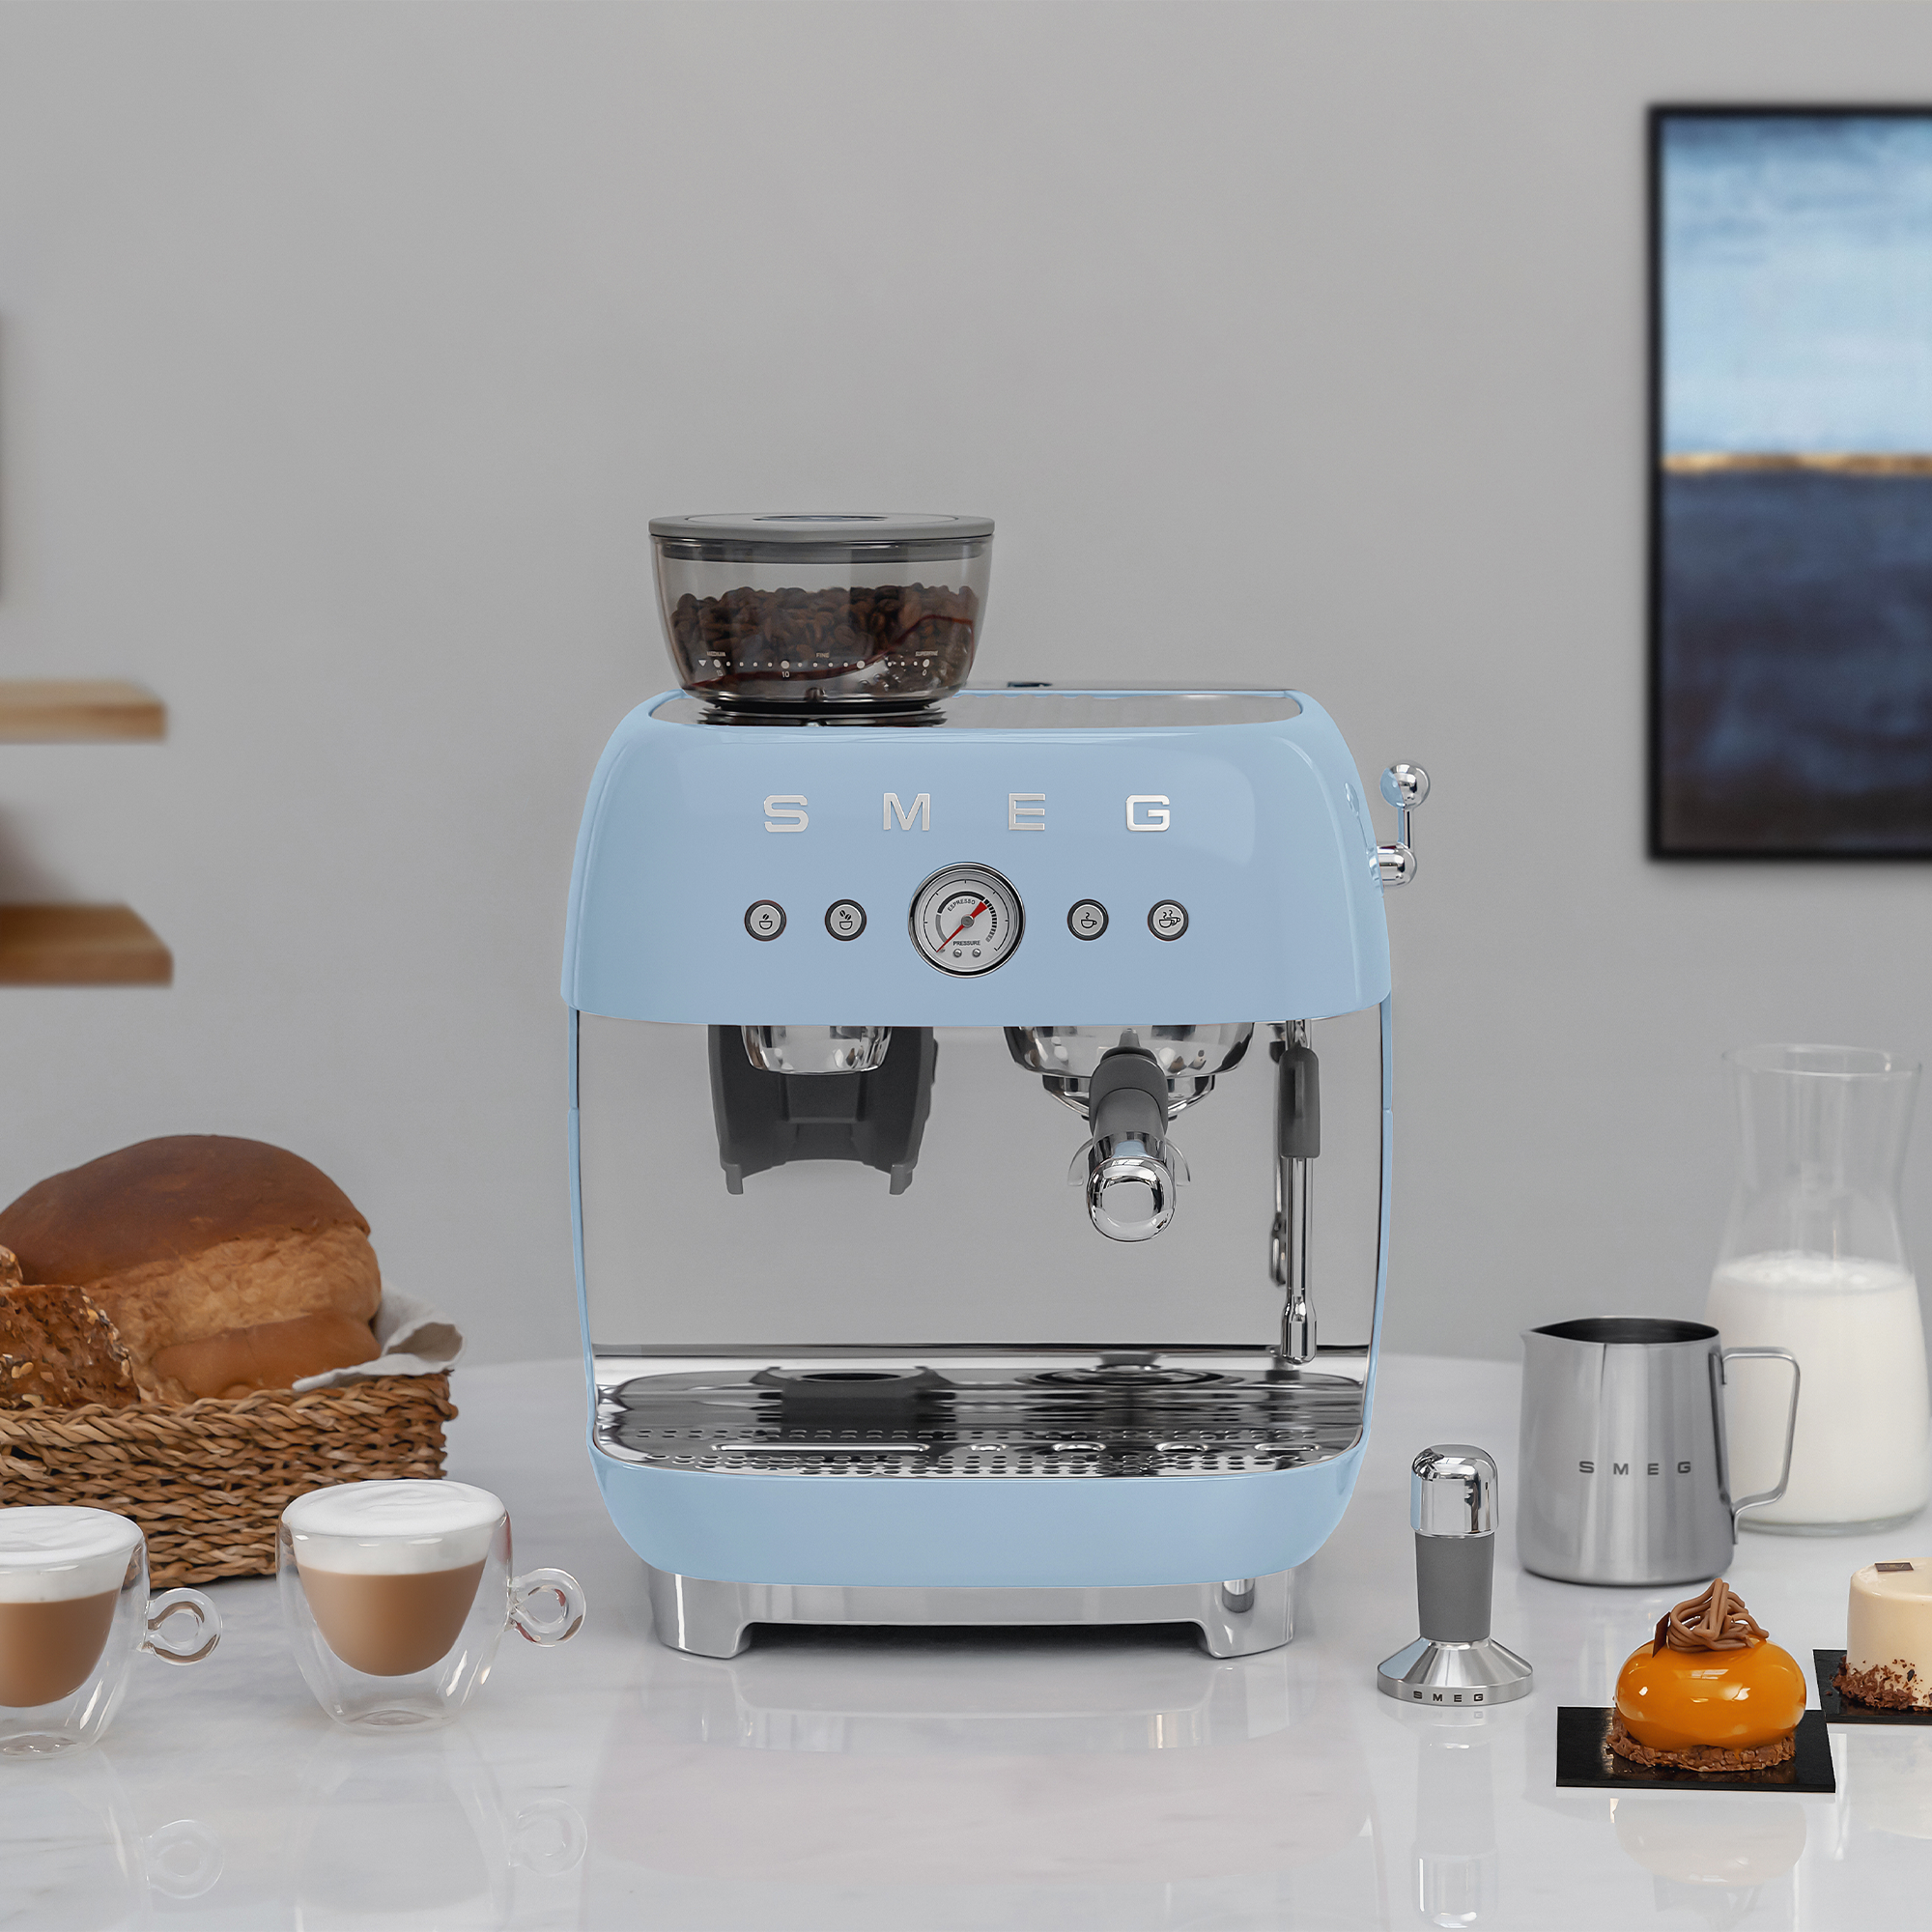 SMEG espresso machine with grinder 50's style - pastel blue